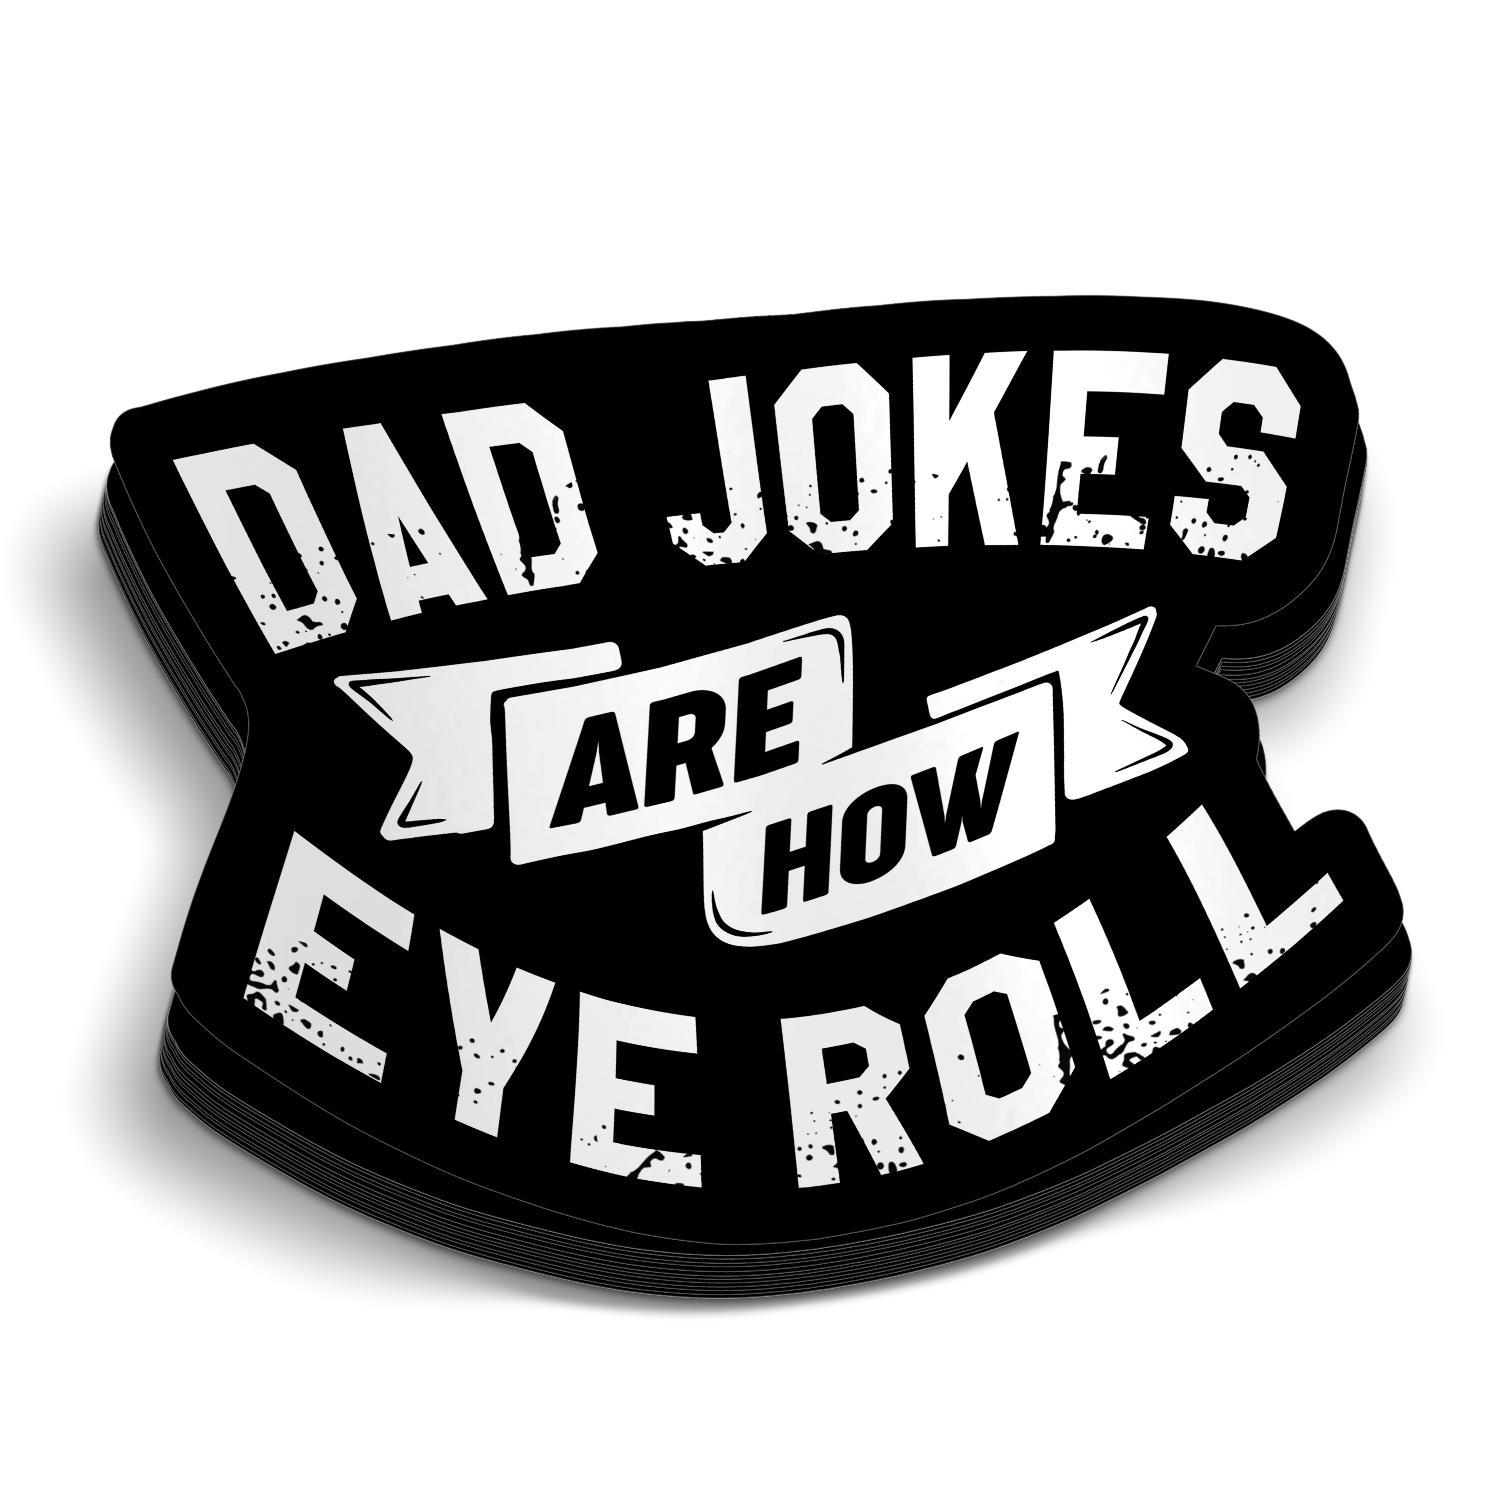 Dad Jokes Are How Eye Roll Sticker